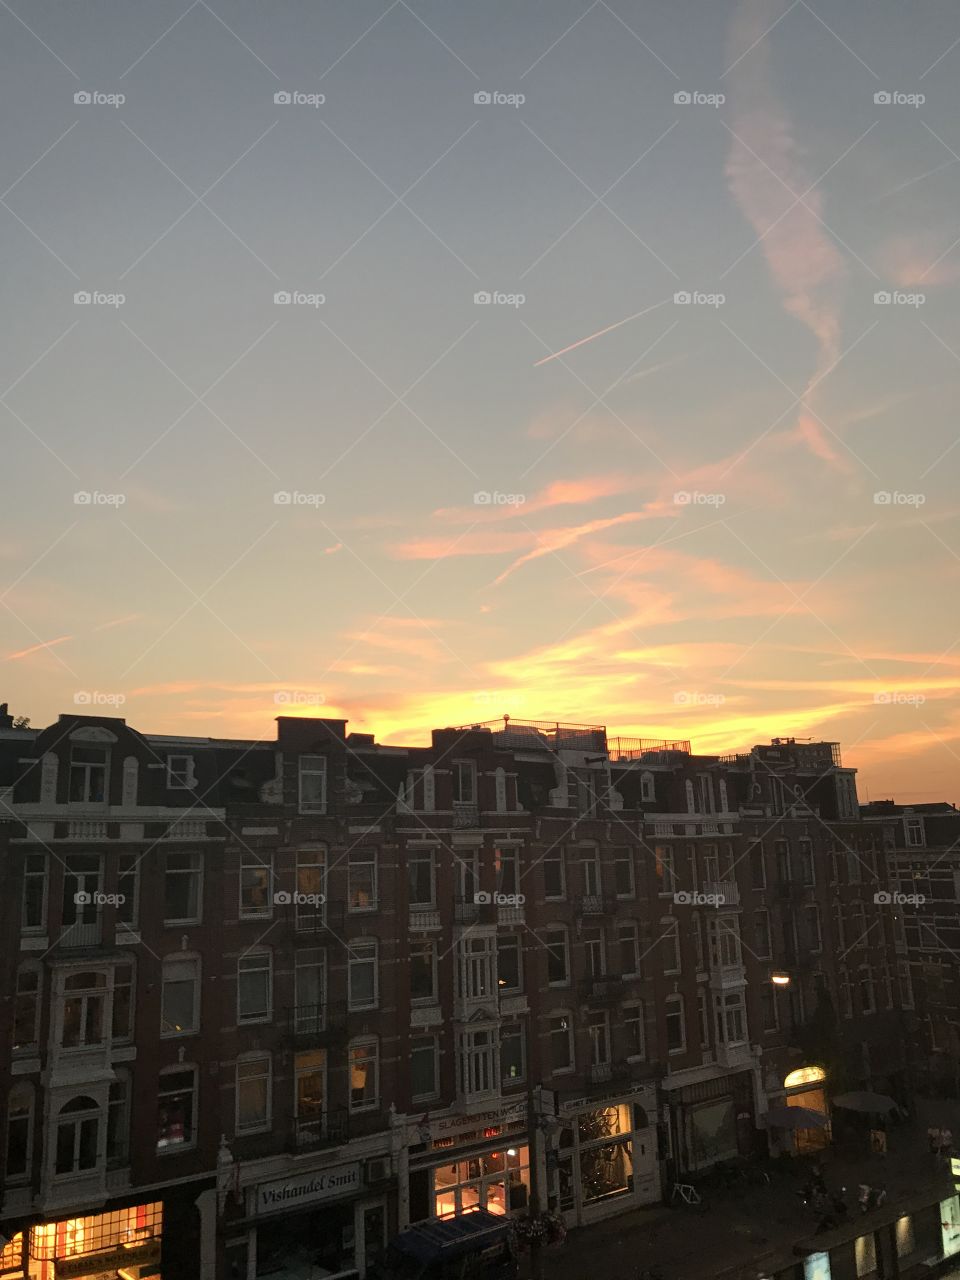 Amsterdam sunset 